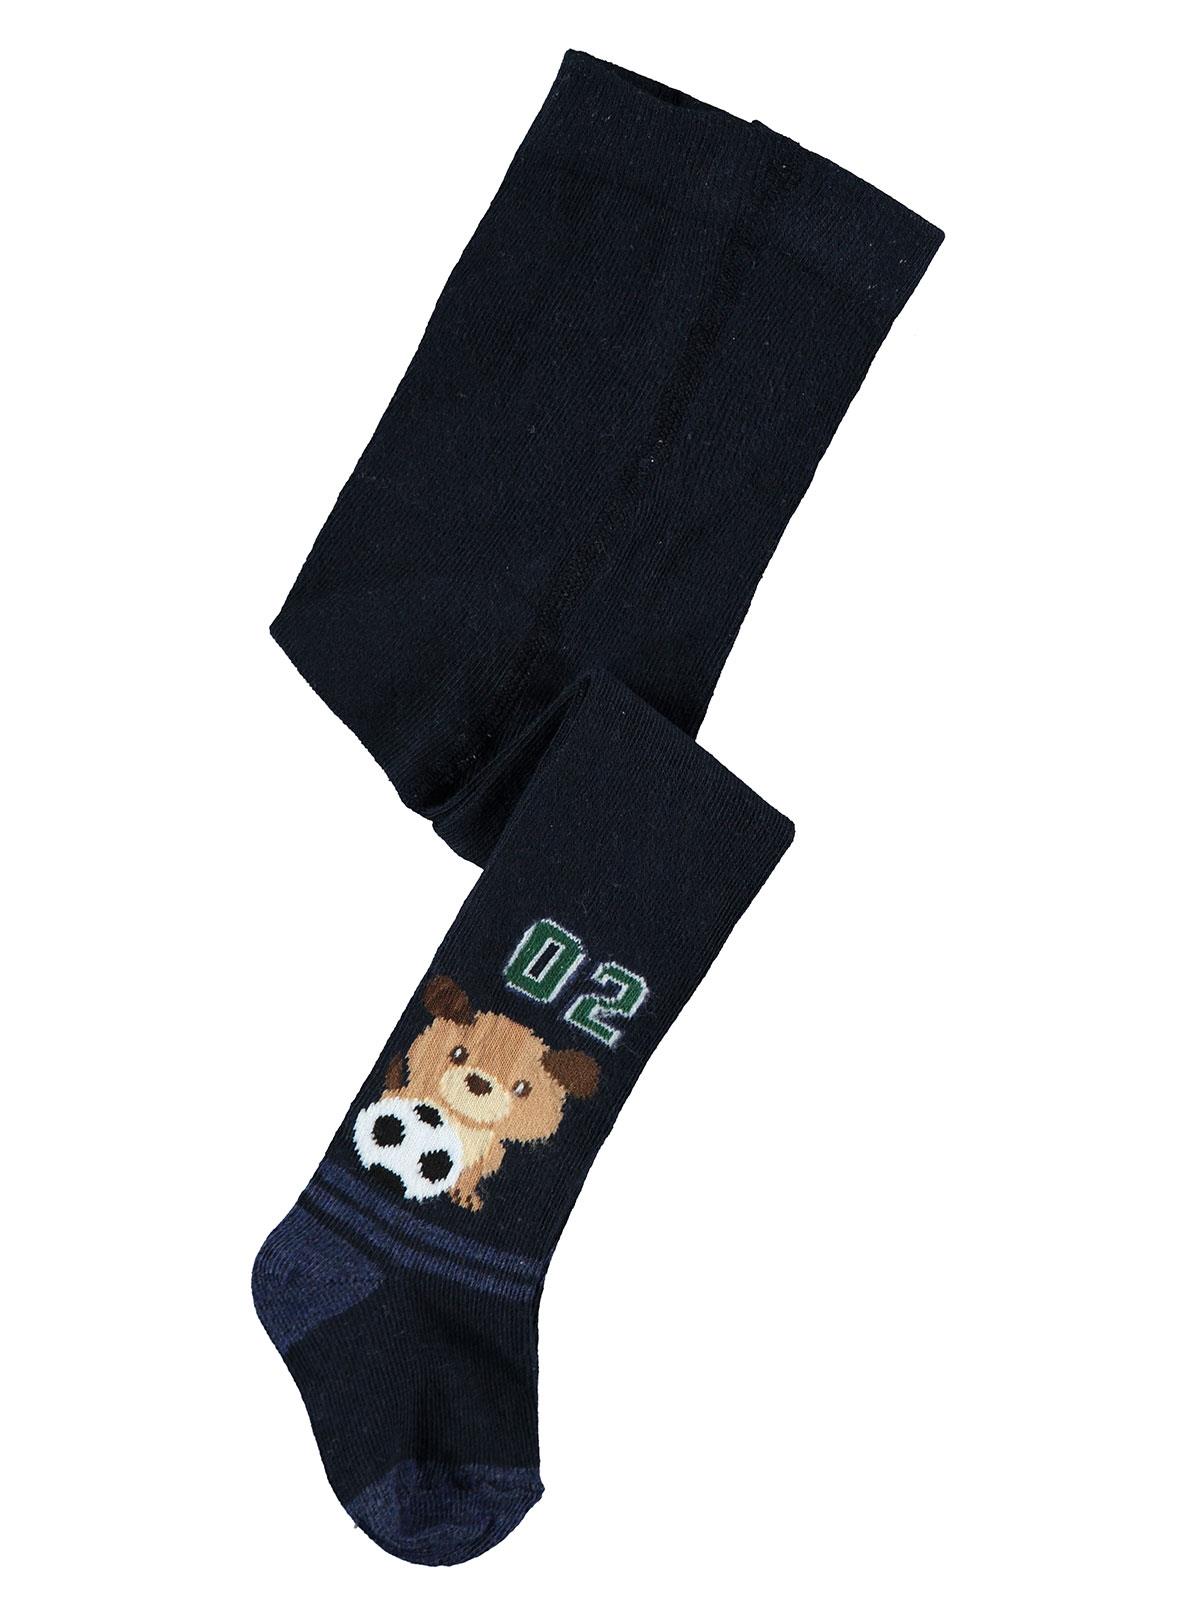 Artı Erkek Bebek Külotlu Çorap 6-18 Ay Lacivert